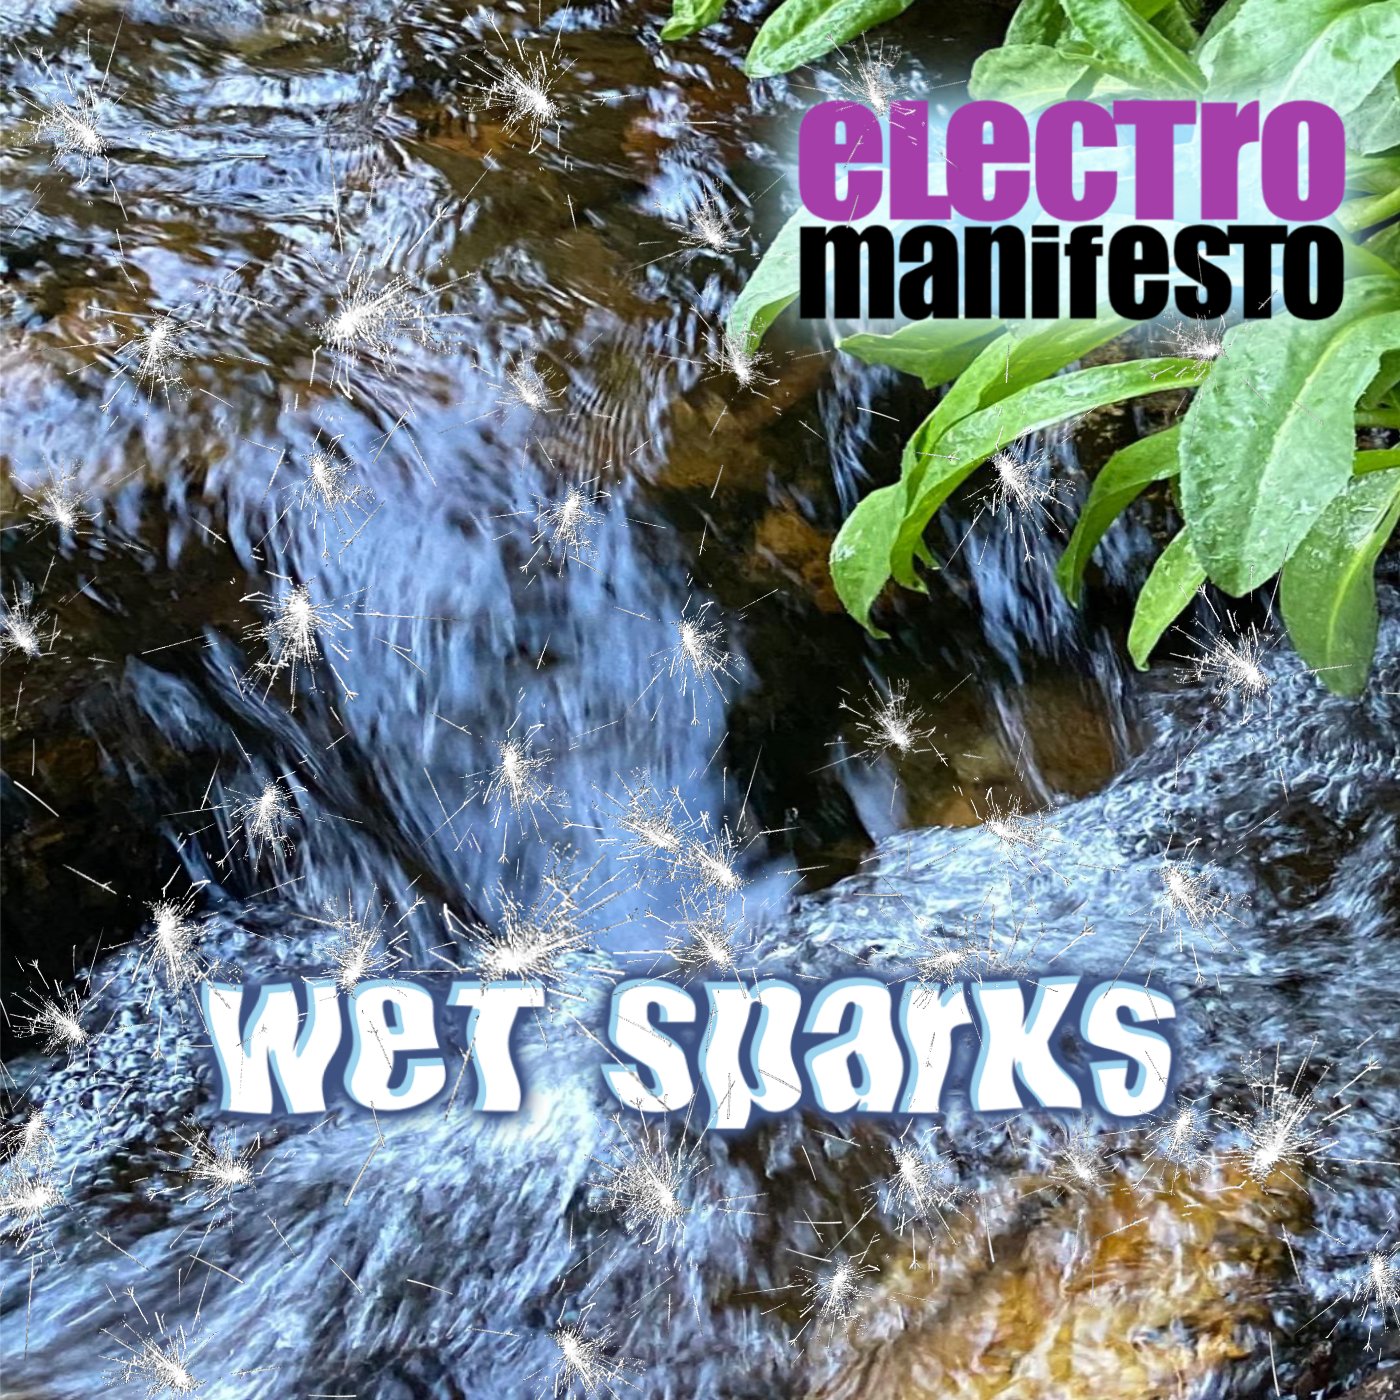 Electro Manifesto: Wet Sparks